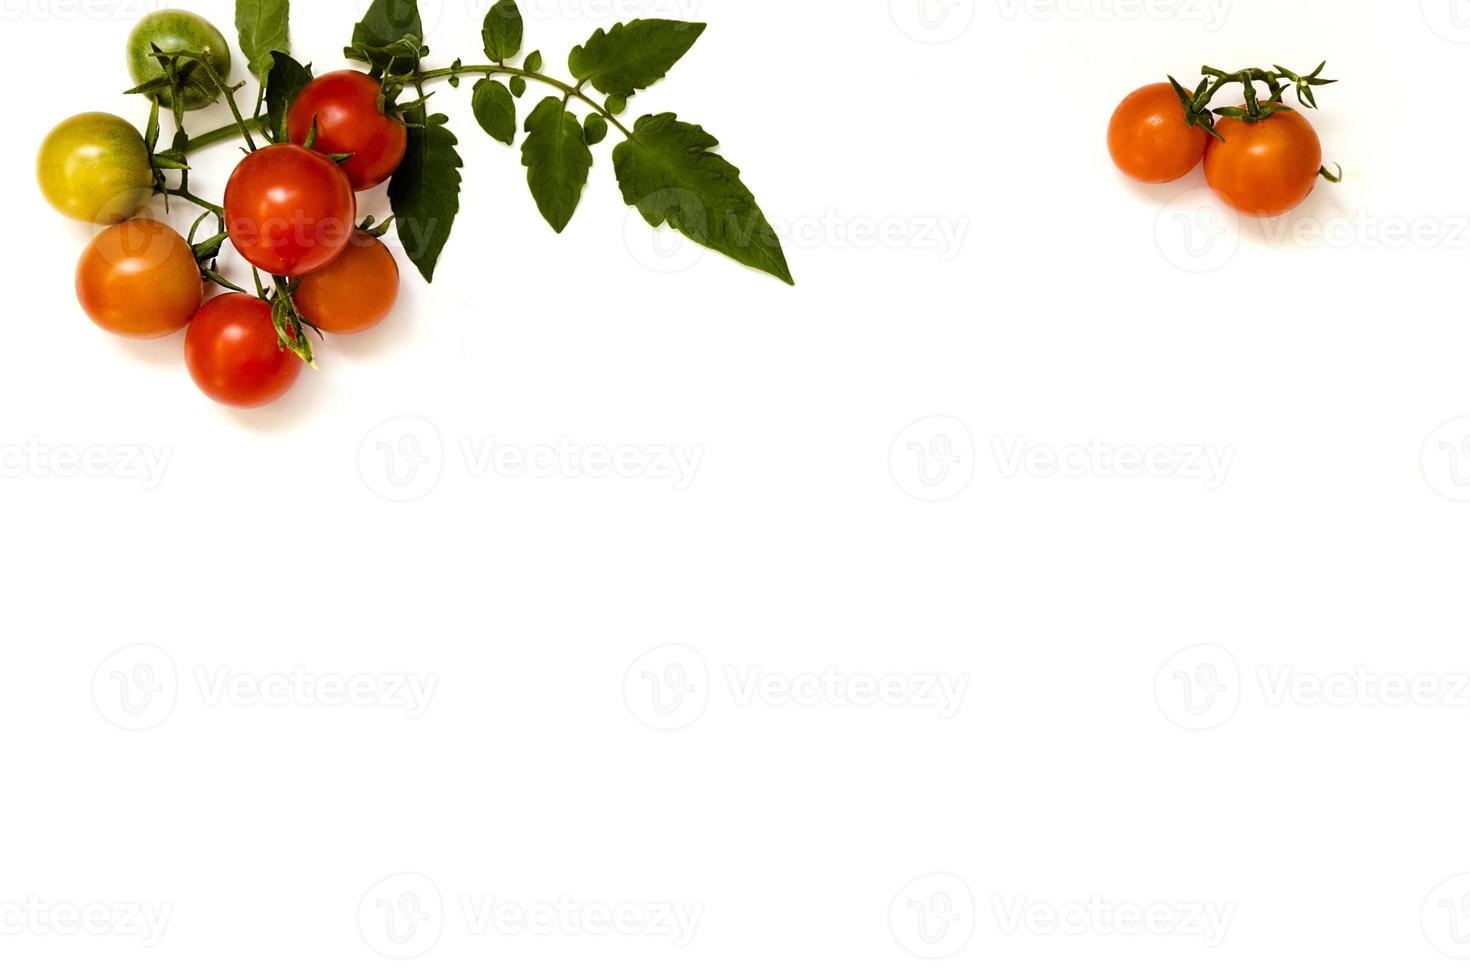 tomates cereja frescos maduros isolados no fundo branco foto